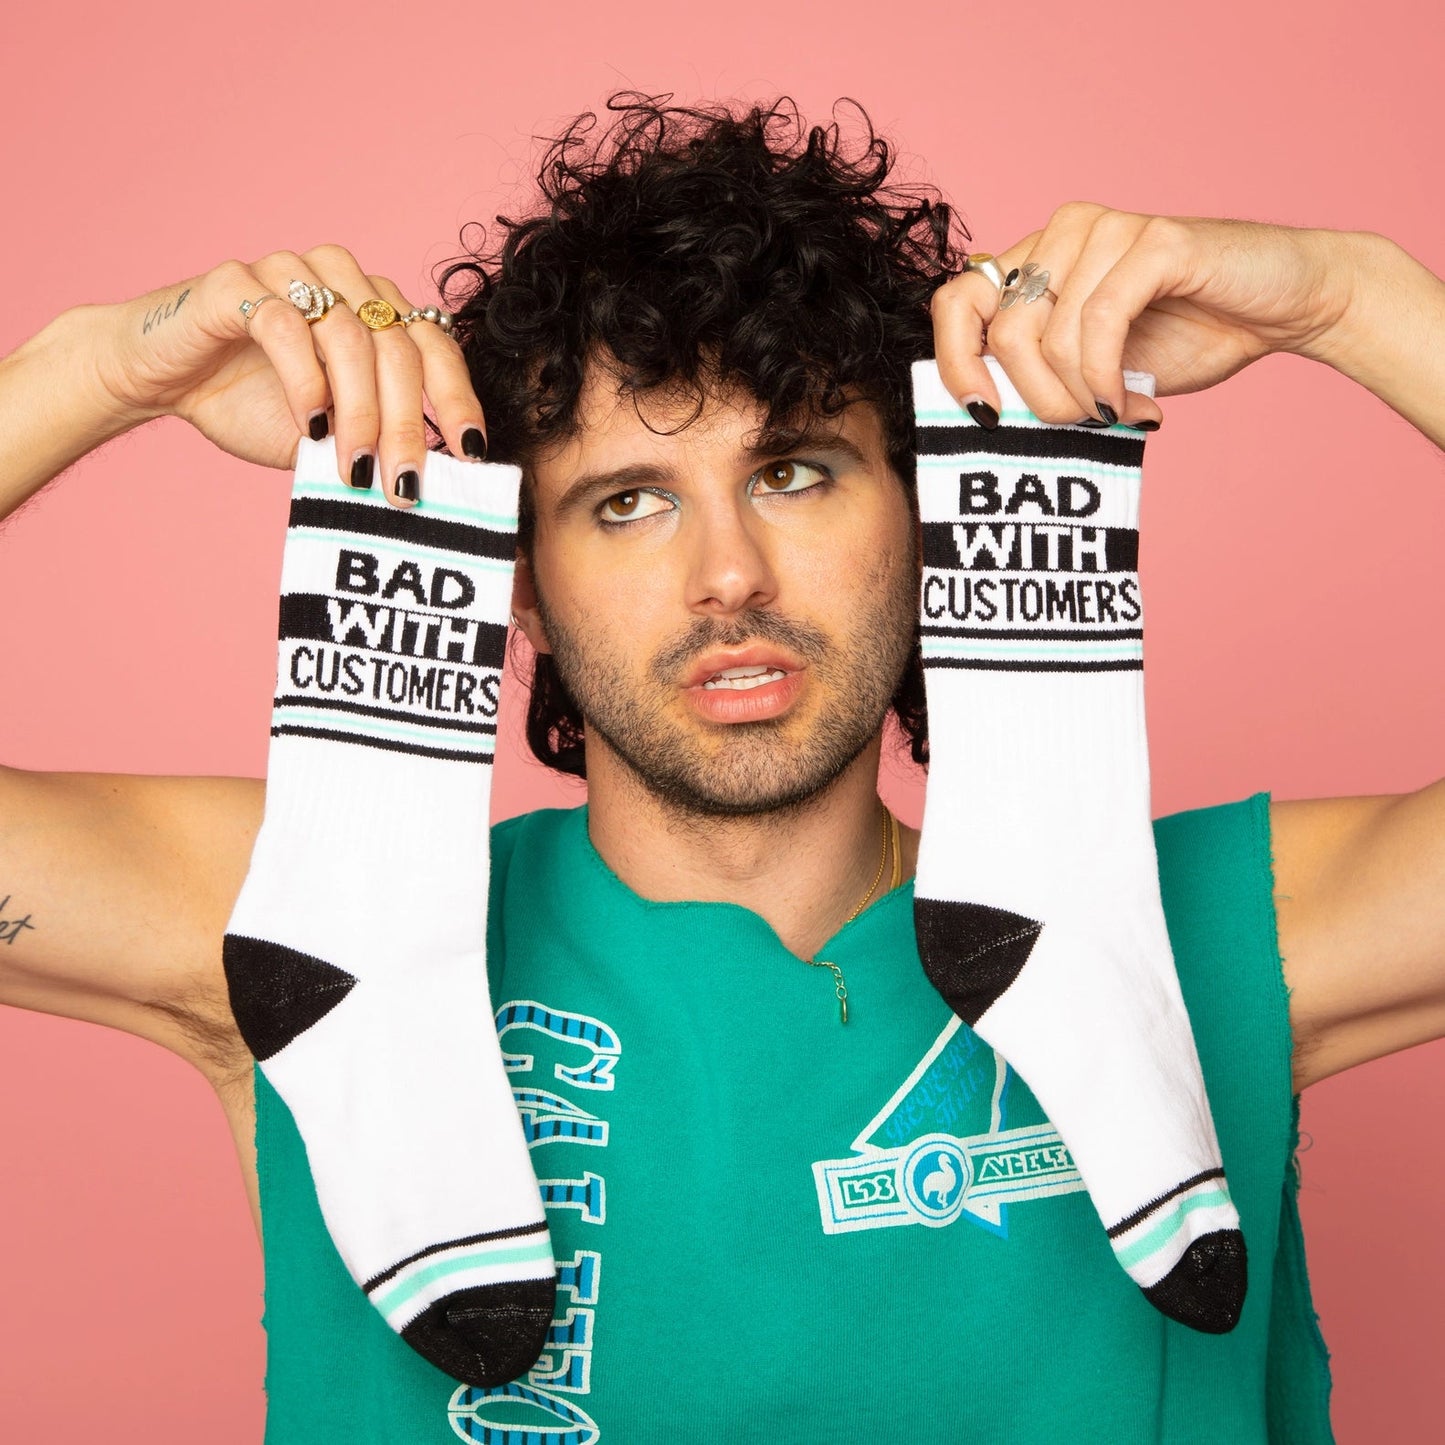 Bad With Customers Crew Socks | Men's Socks | Women's Socks